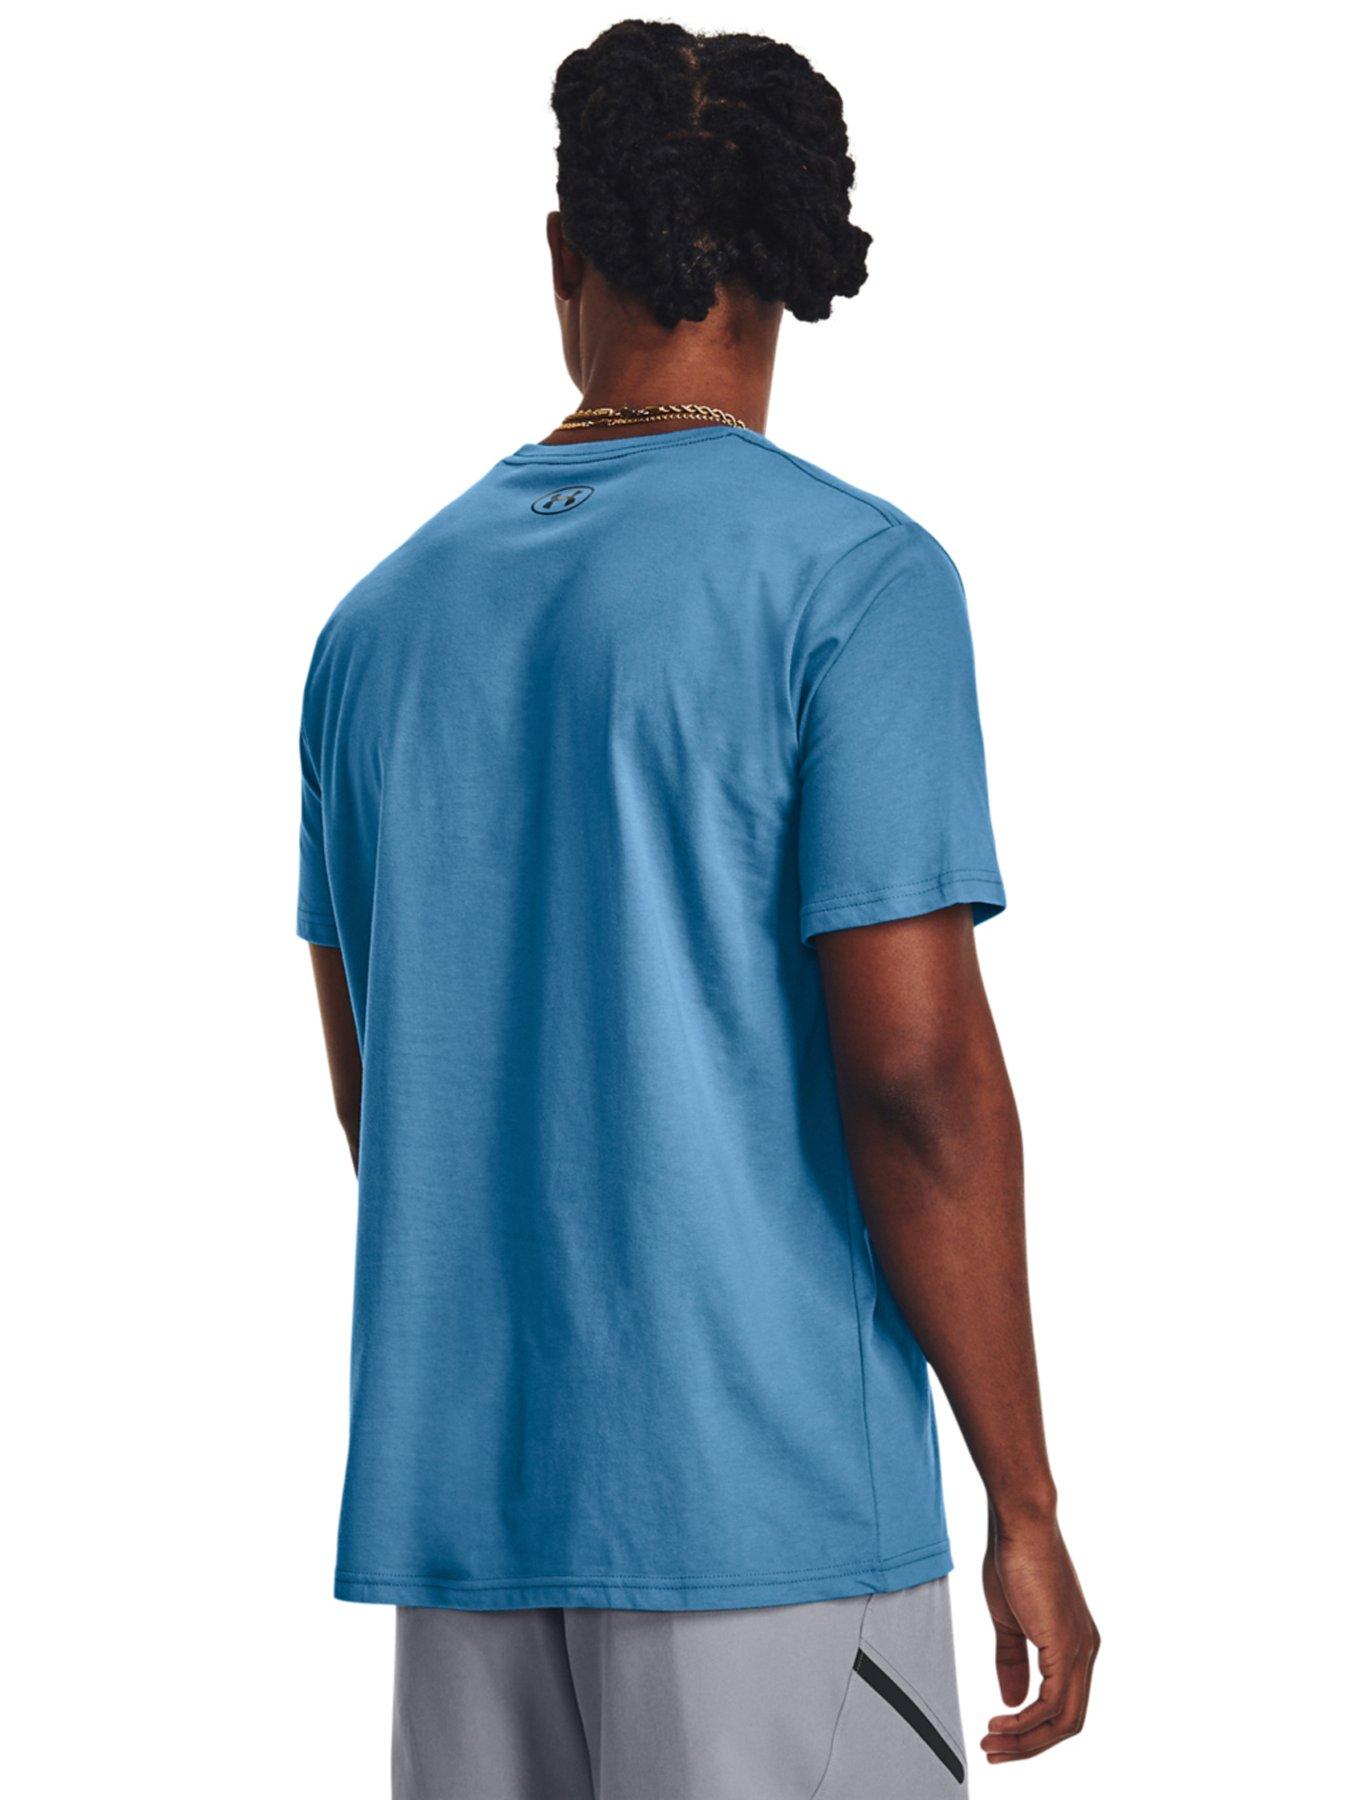 UNDER ARMOUR Sportstyle Left Chest Logo T-shirt - Blue